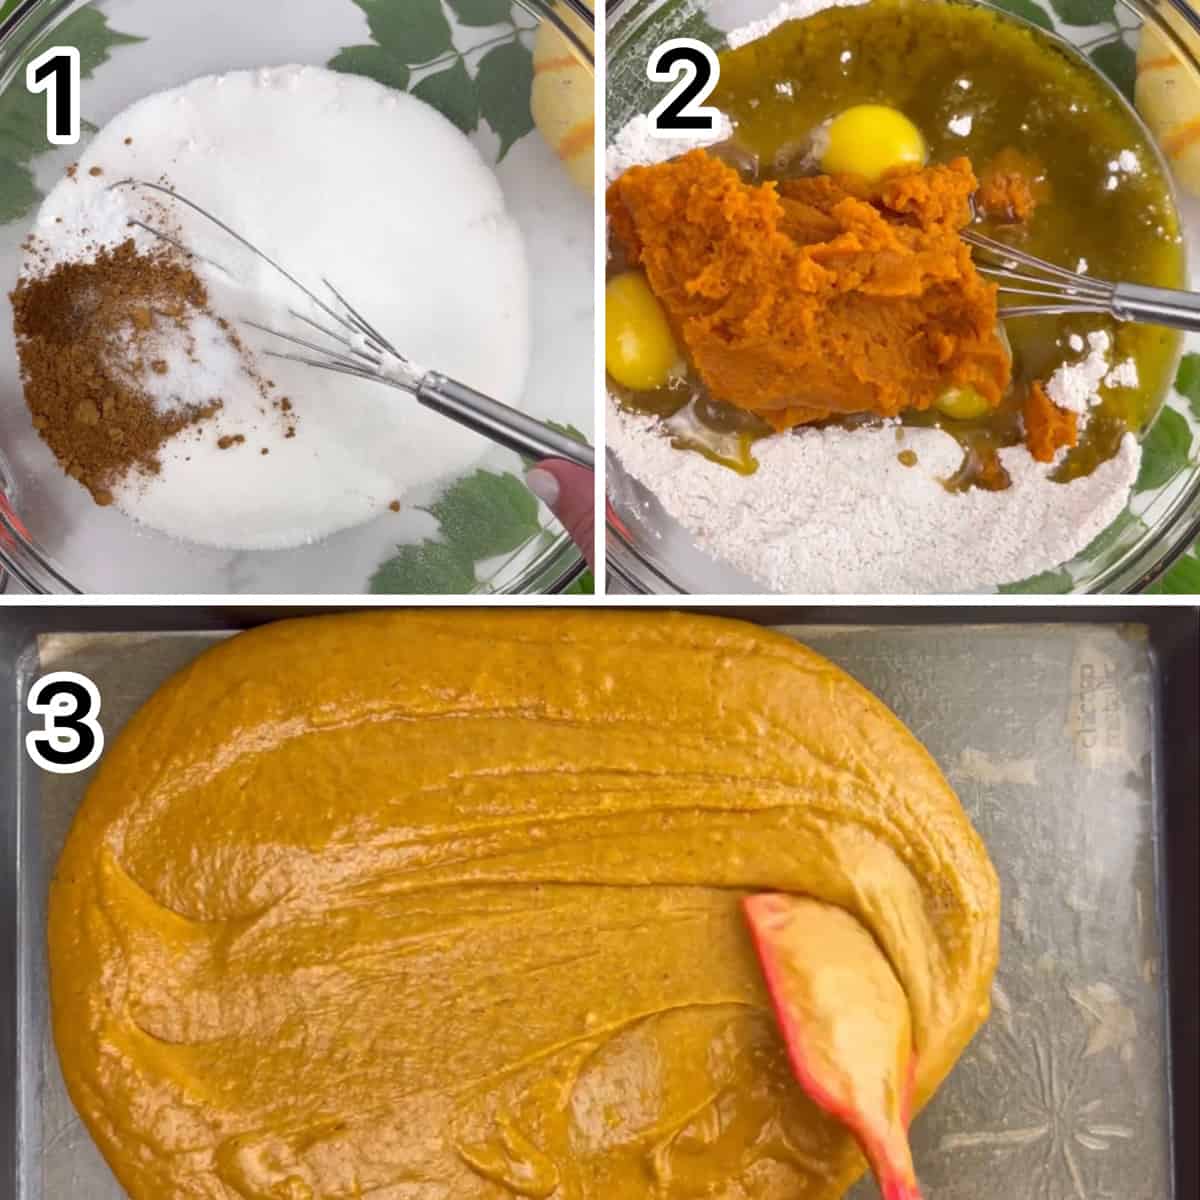 How to make pumpkin bars.